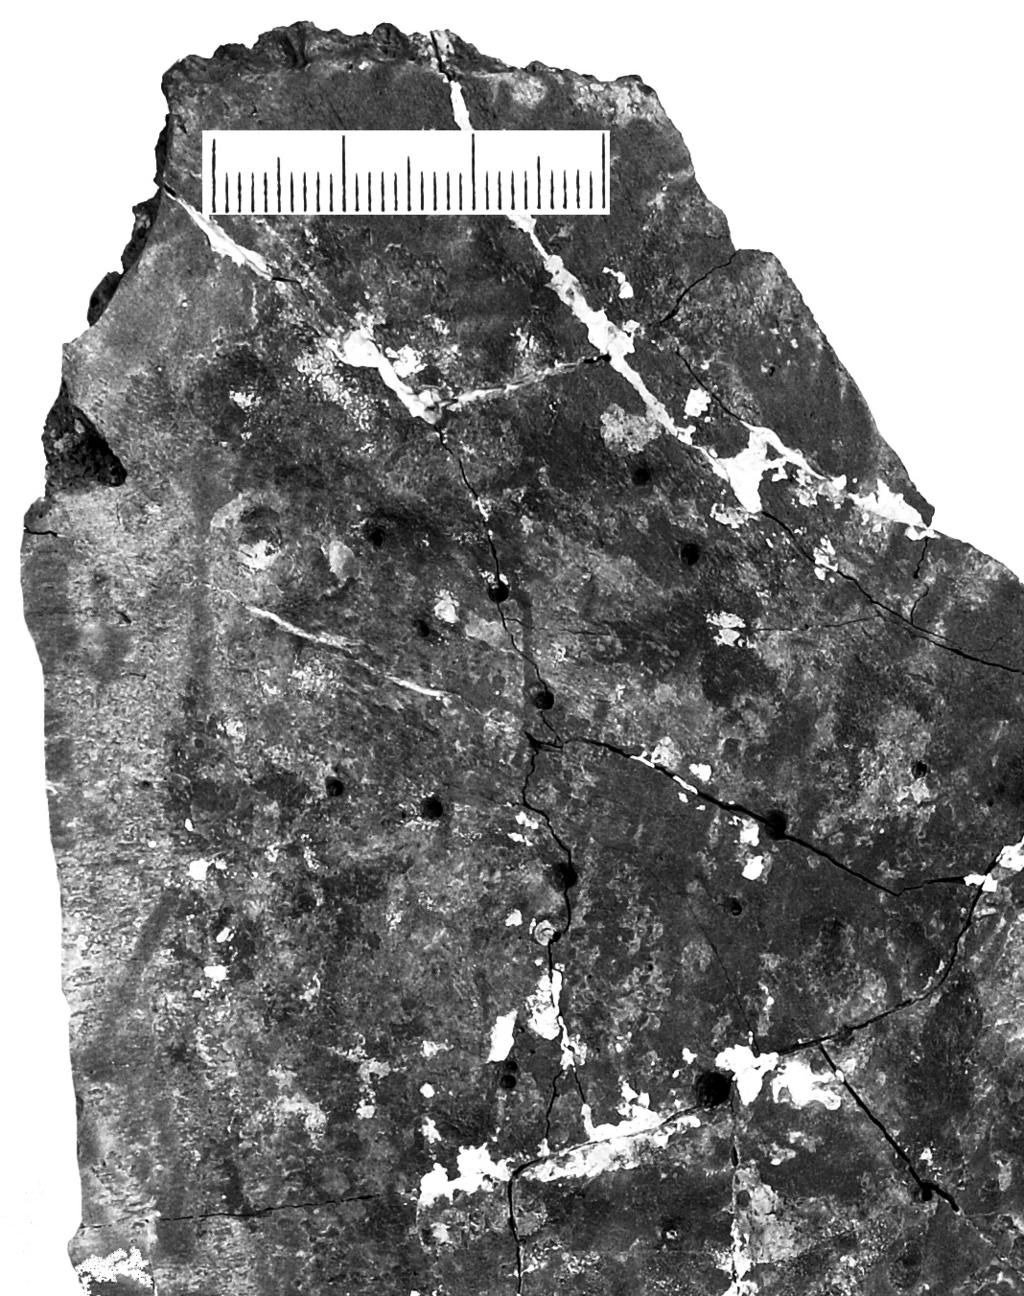 H.-V. Karl, E. Gröning & C. Brauckmann 19 Plate 3. Osedacoides jurassicus n. ichnogen. n. ichnosp.